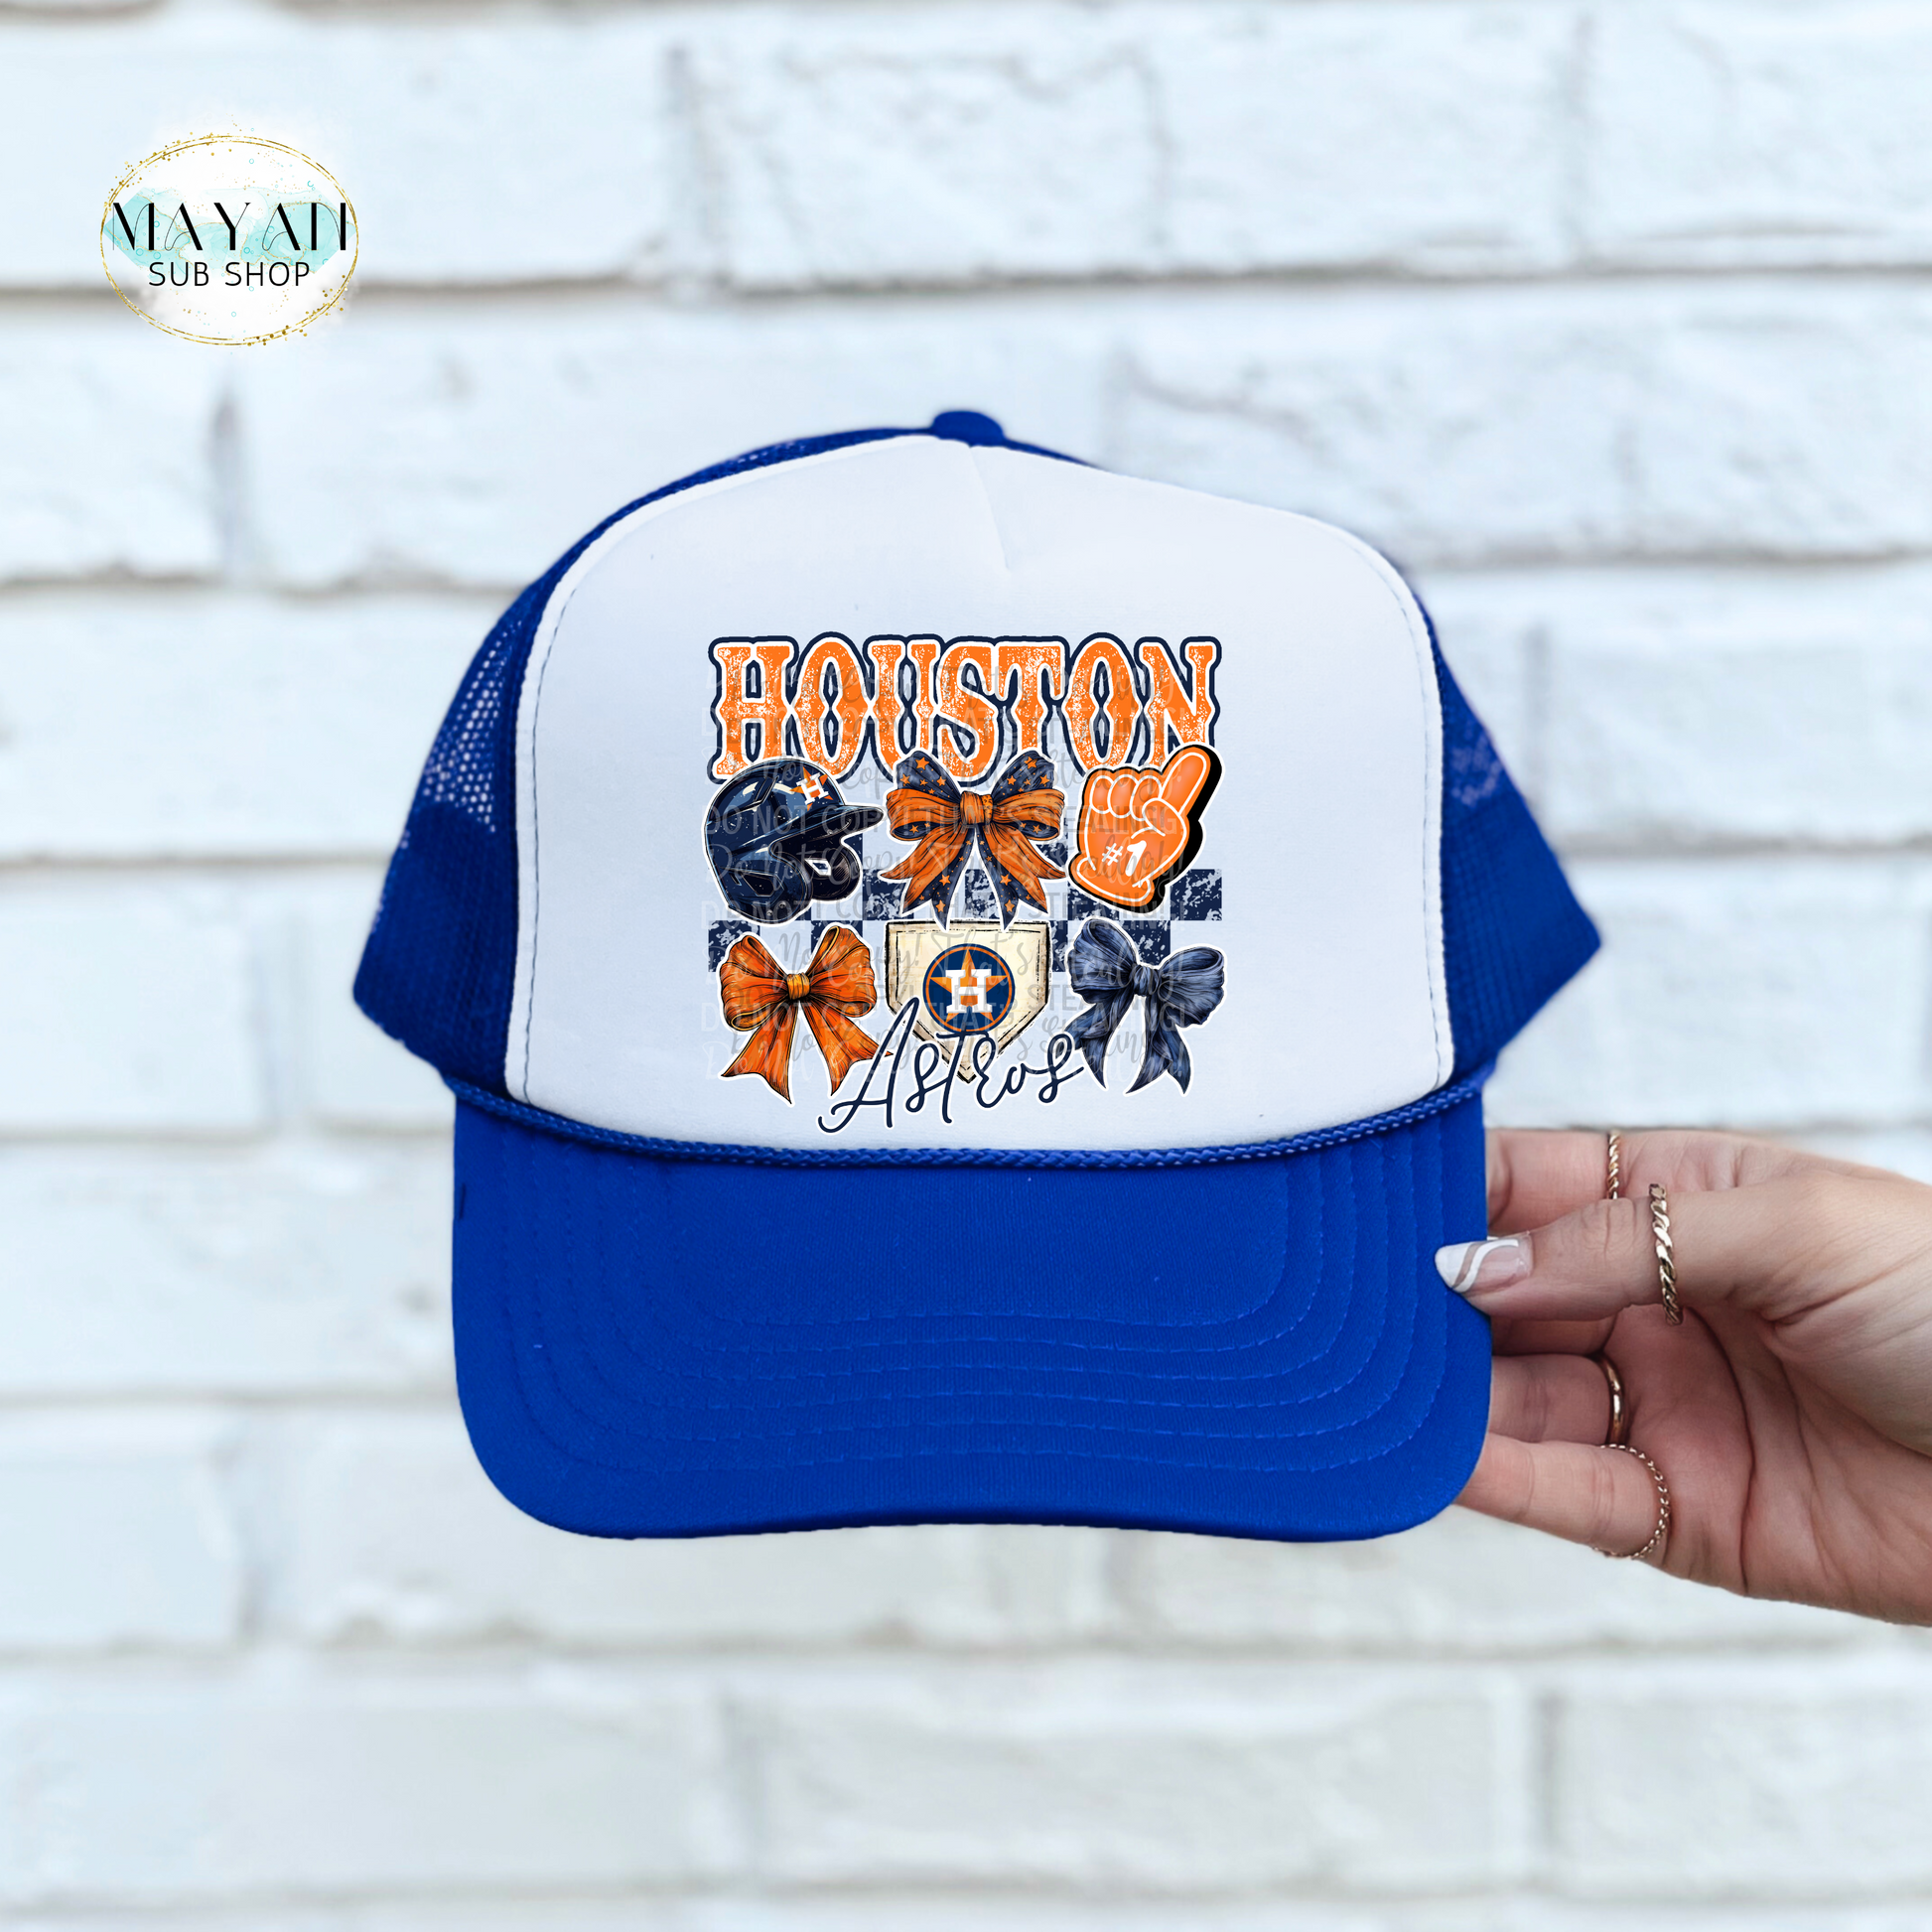 Houston Baseball Coquette Trucker Hat - Mayan Sub Shop